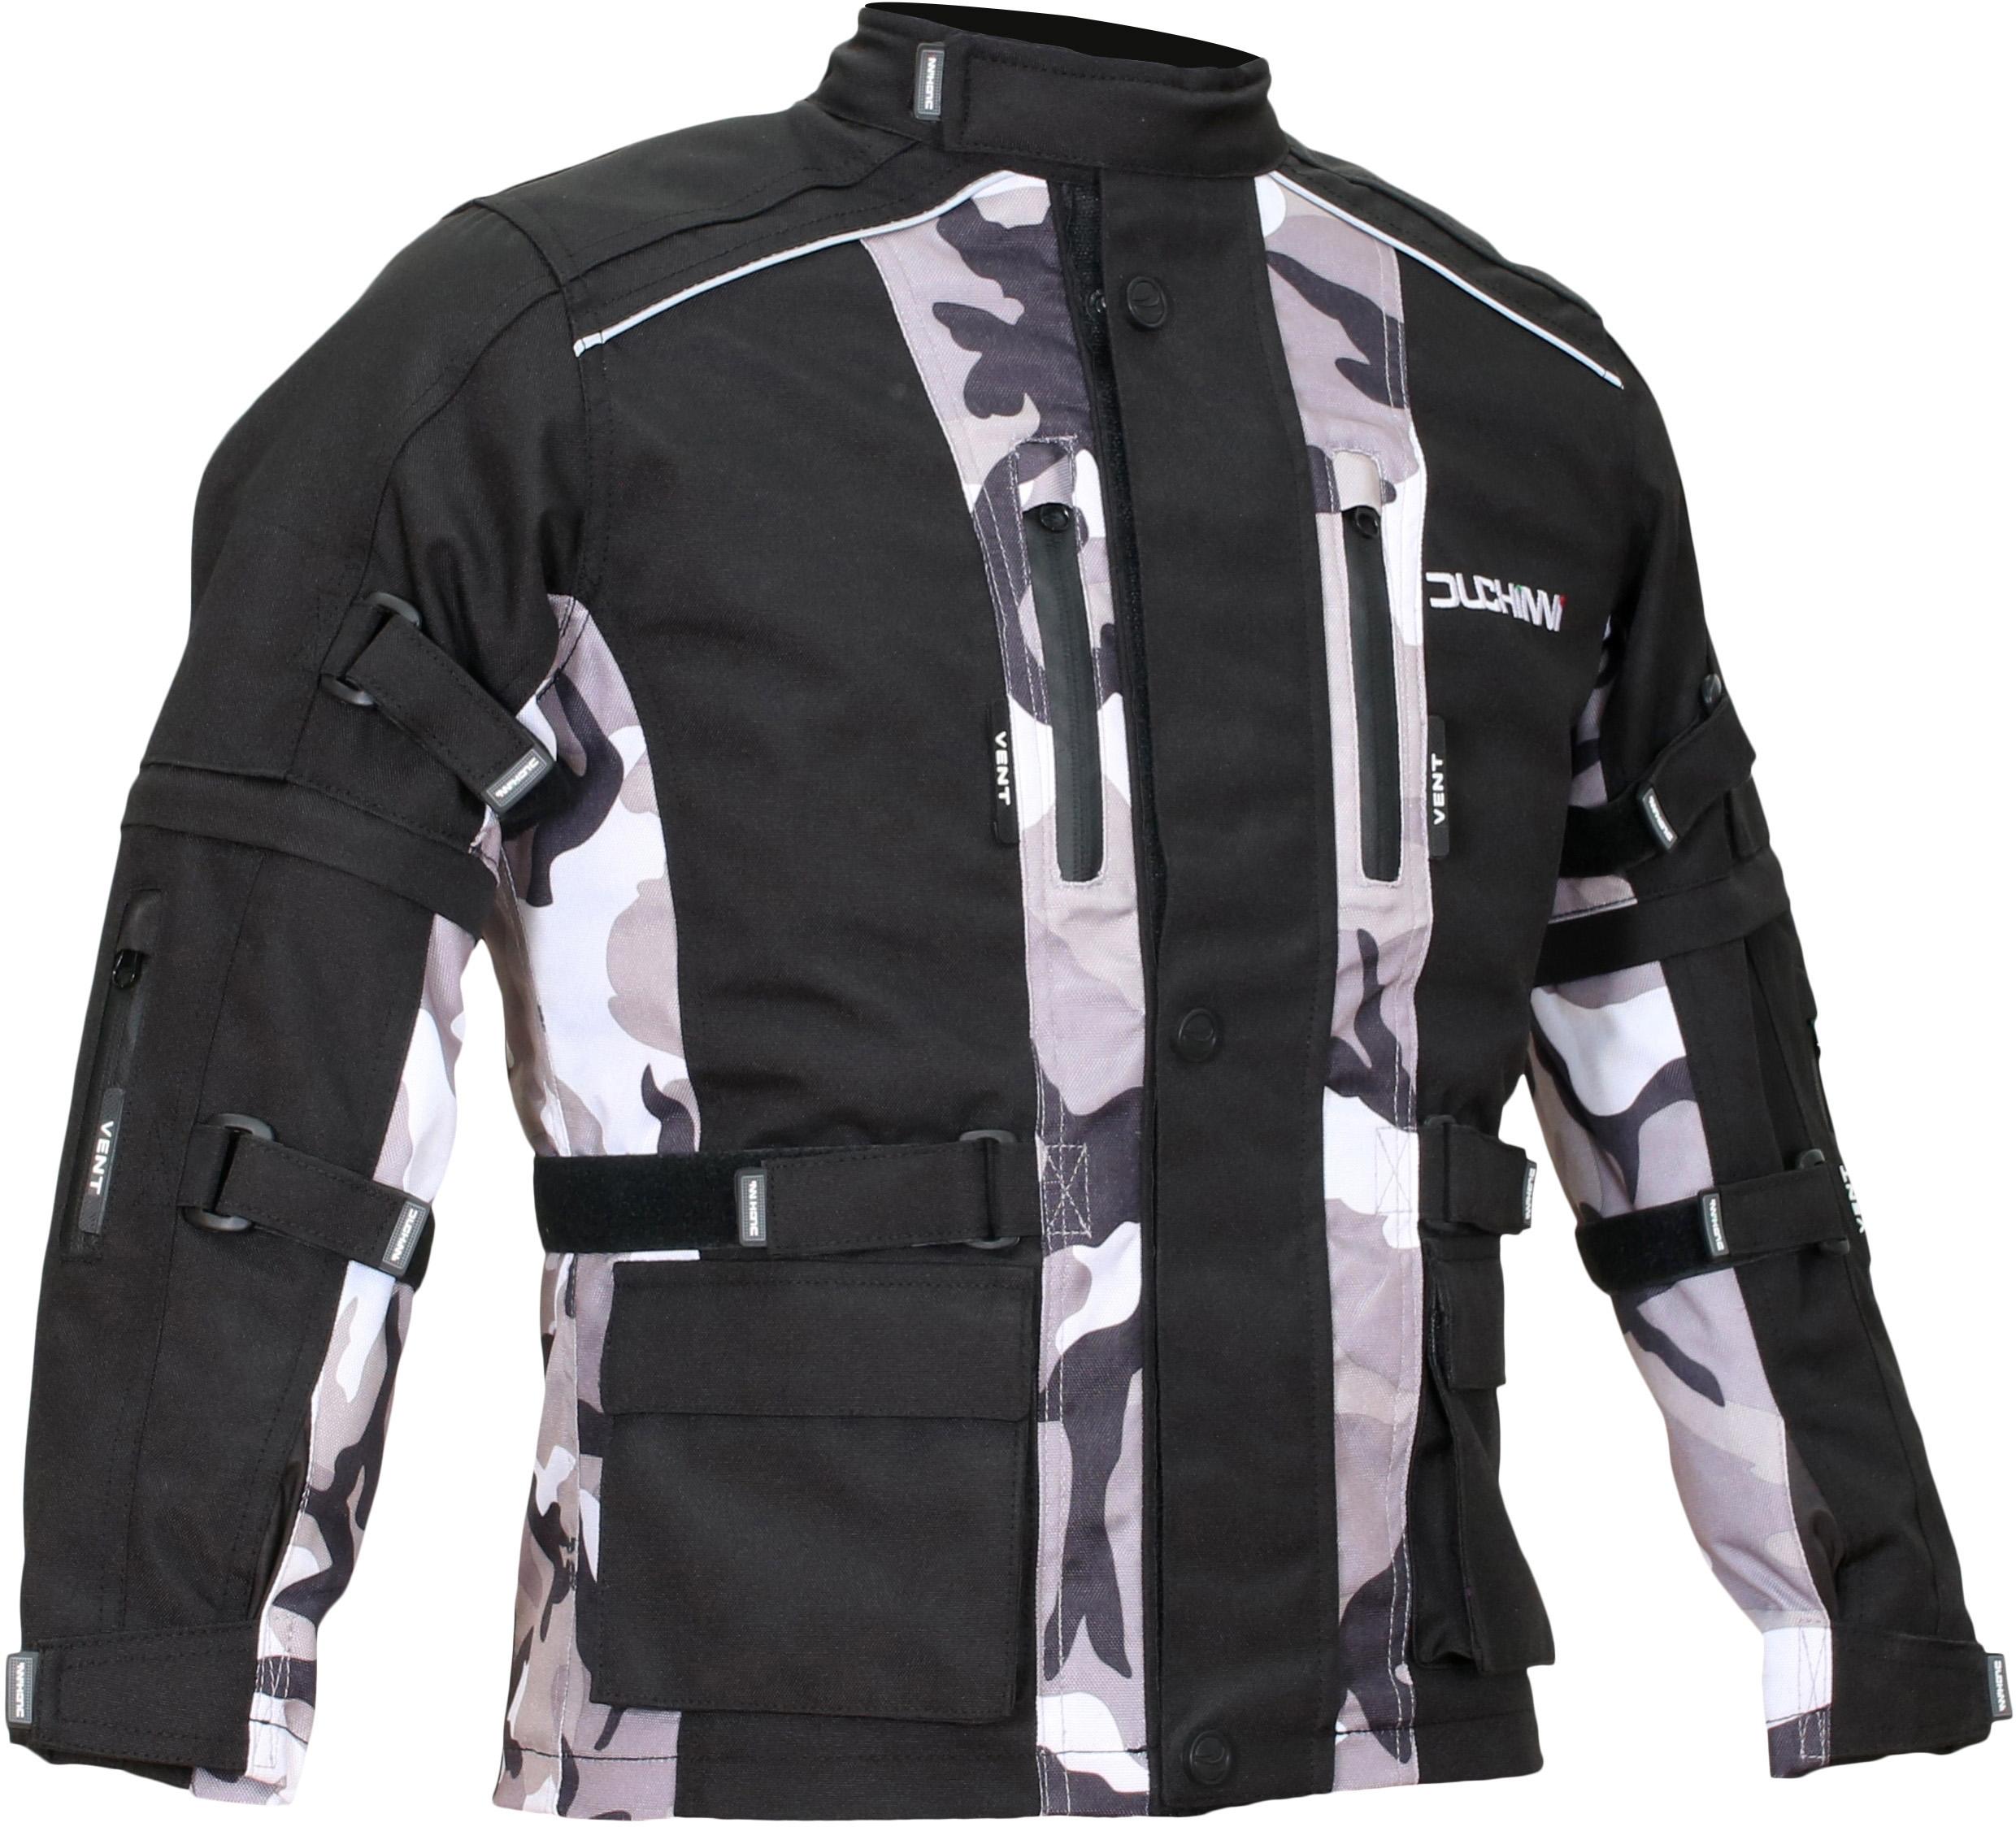 Duchinni Jago Youth Motorcycle Jacket - Black And Camo, Xs